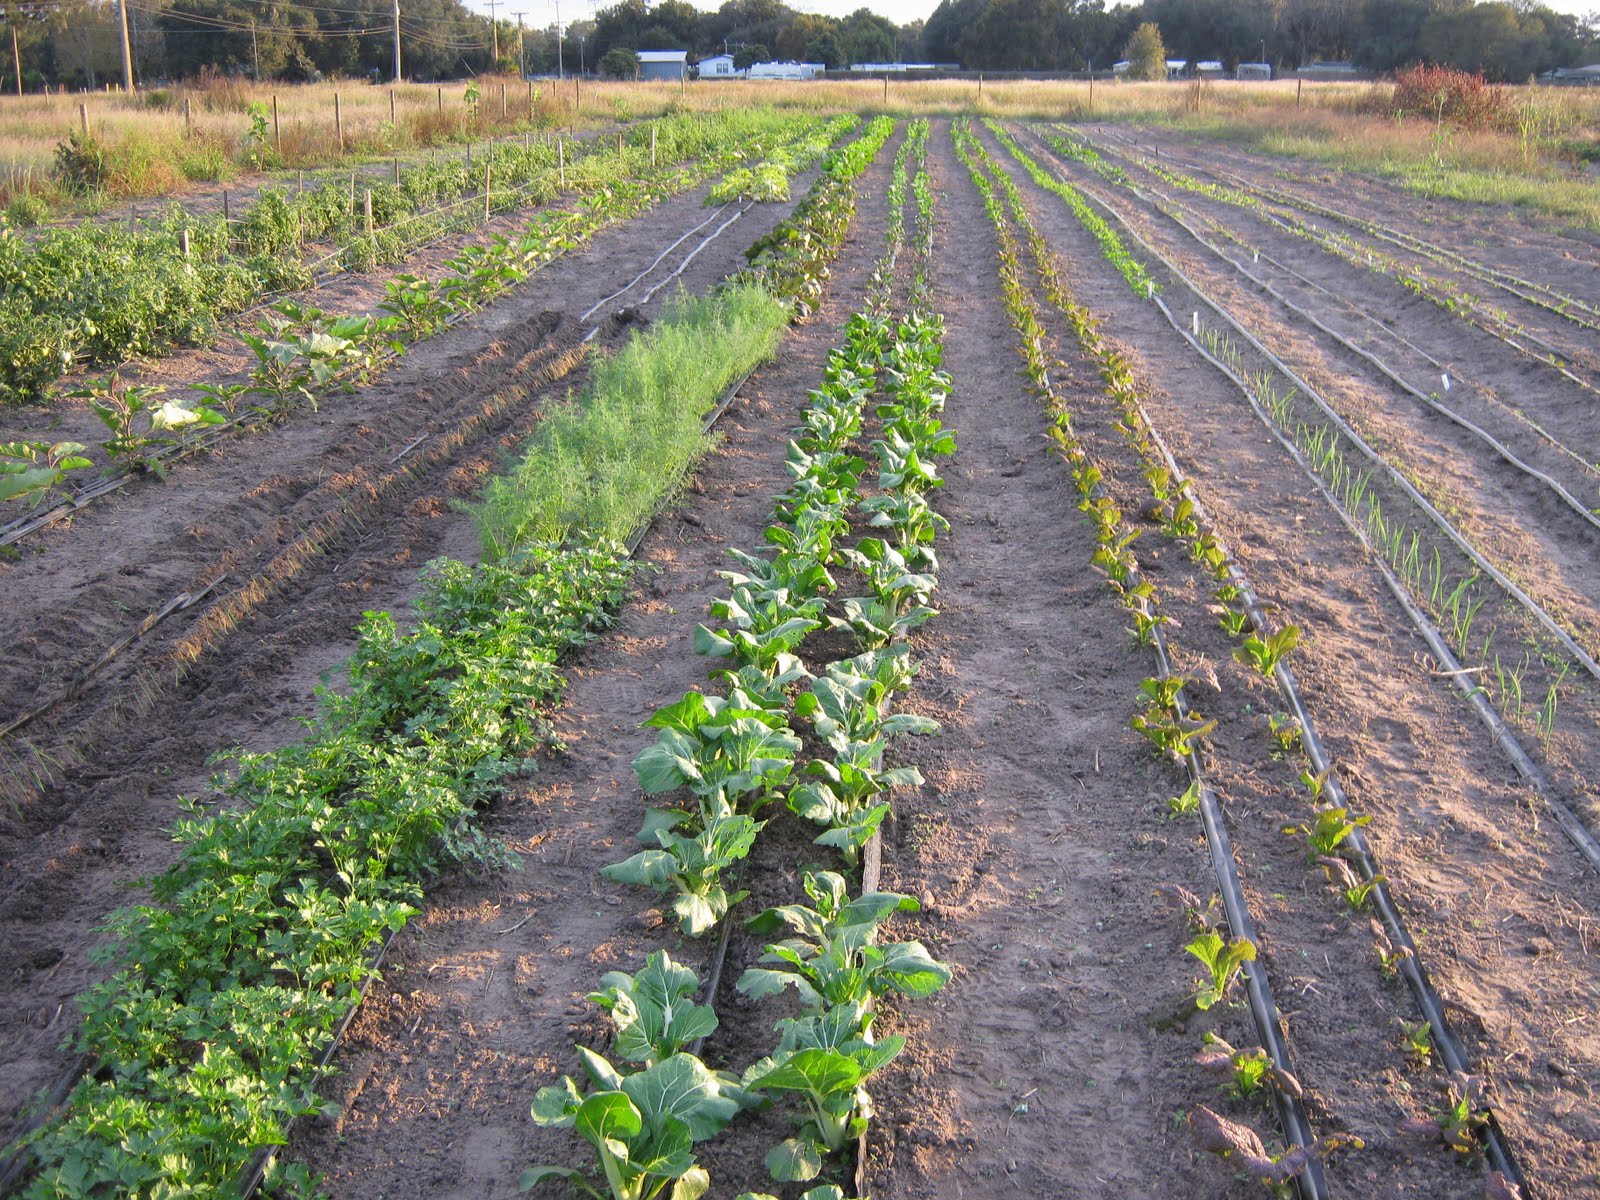 The Organic CSA Vegetable Field